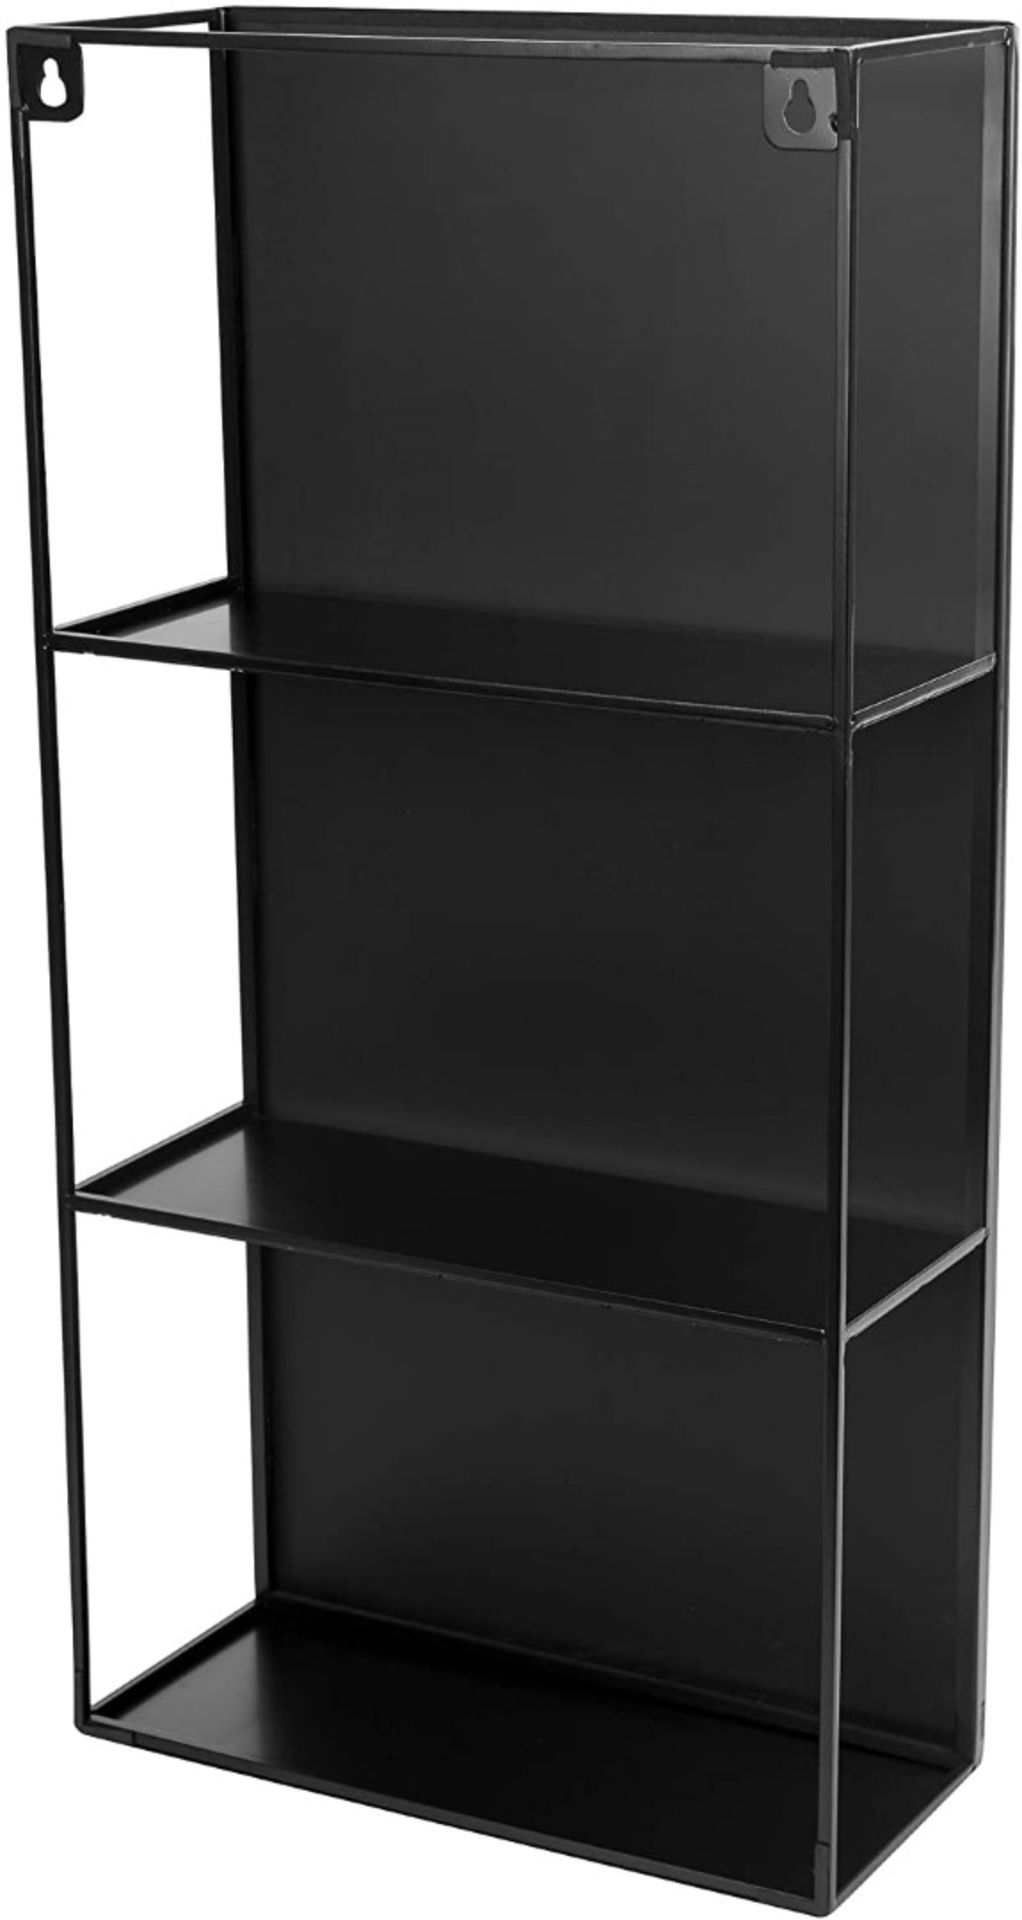 1 x Umbra 'CUBIKO' Sleek Modern Mirrored Medicine Cabinet With A Black Metal Frame - Dimensions: - Image 2 of 8